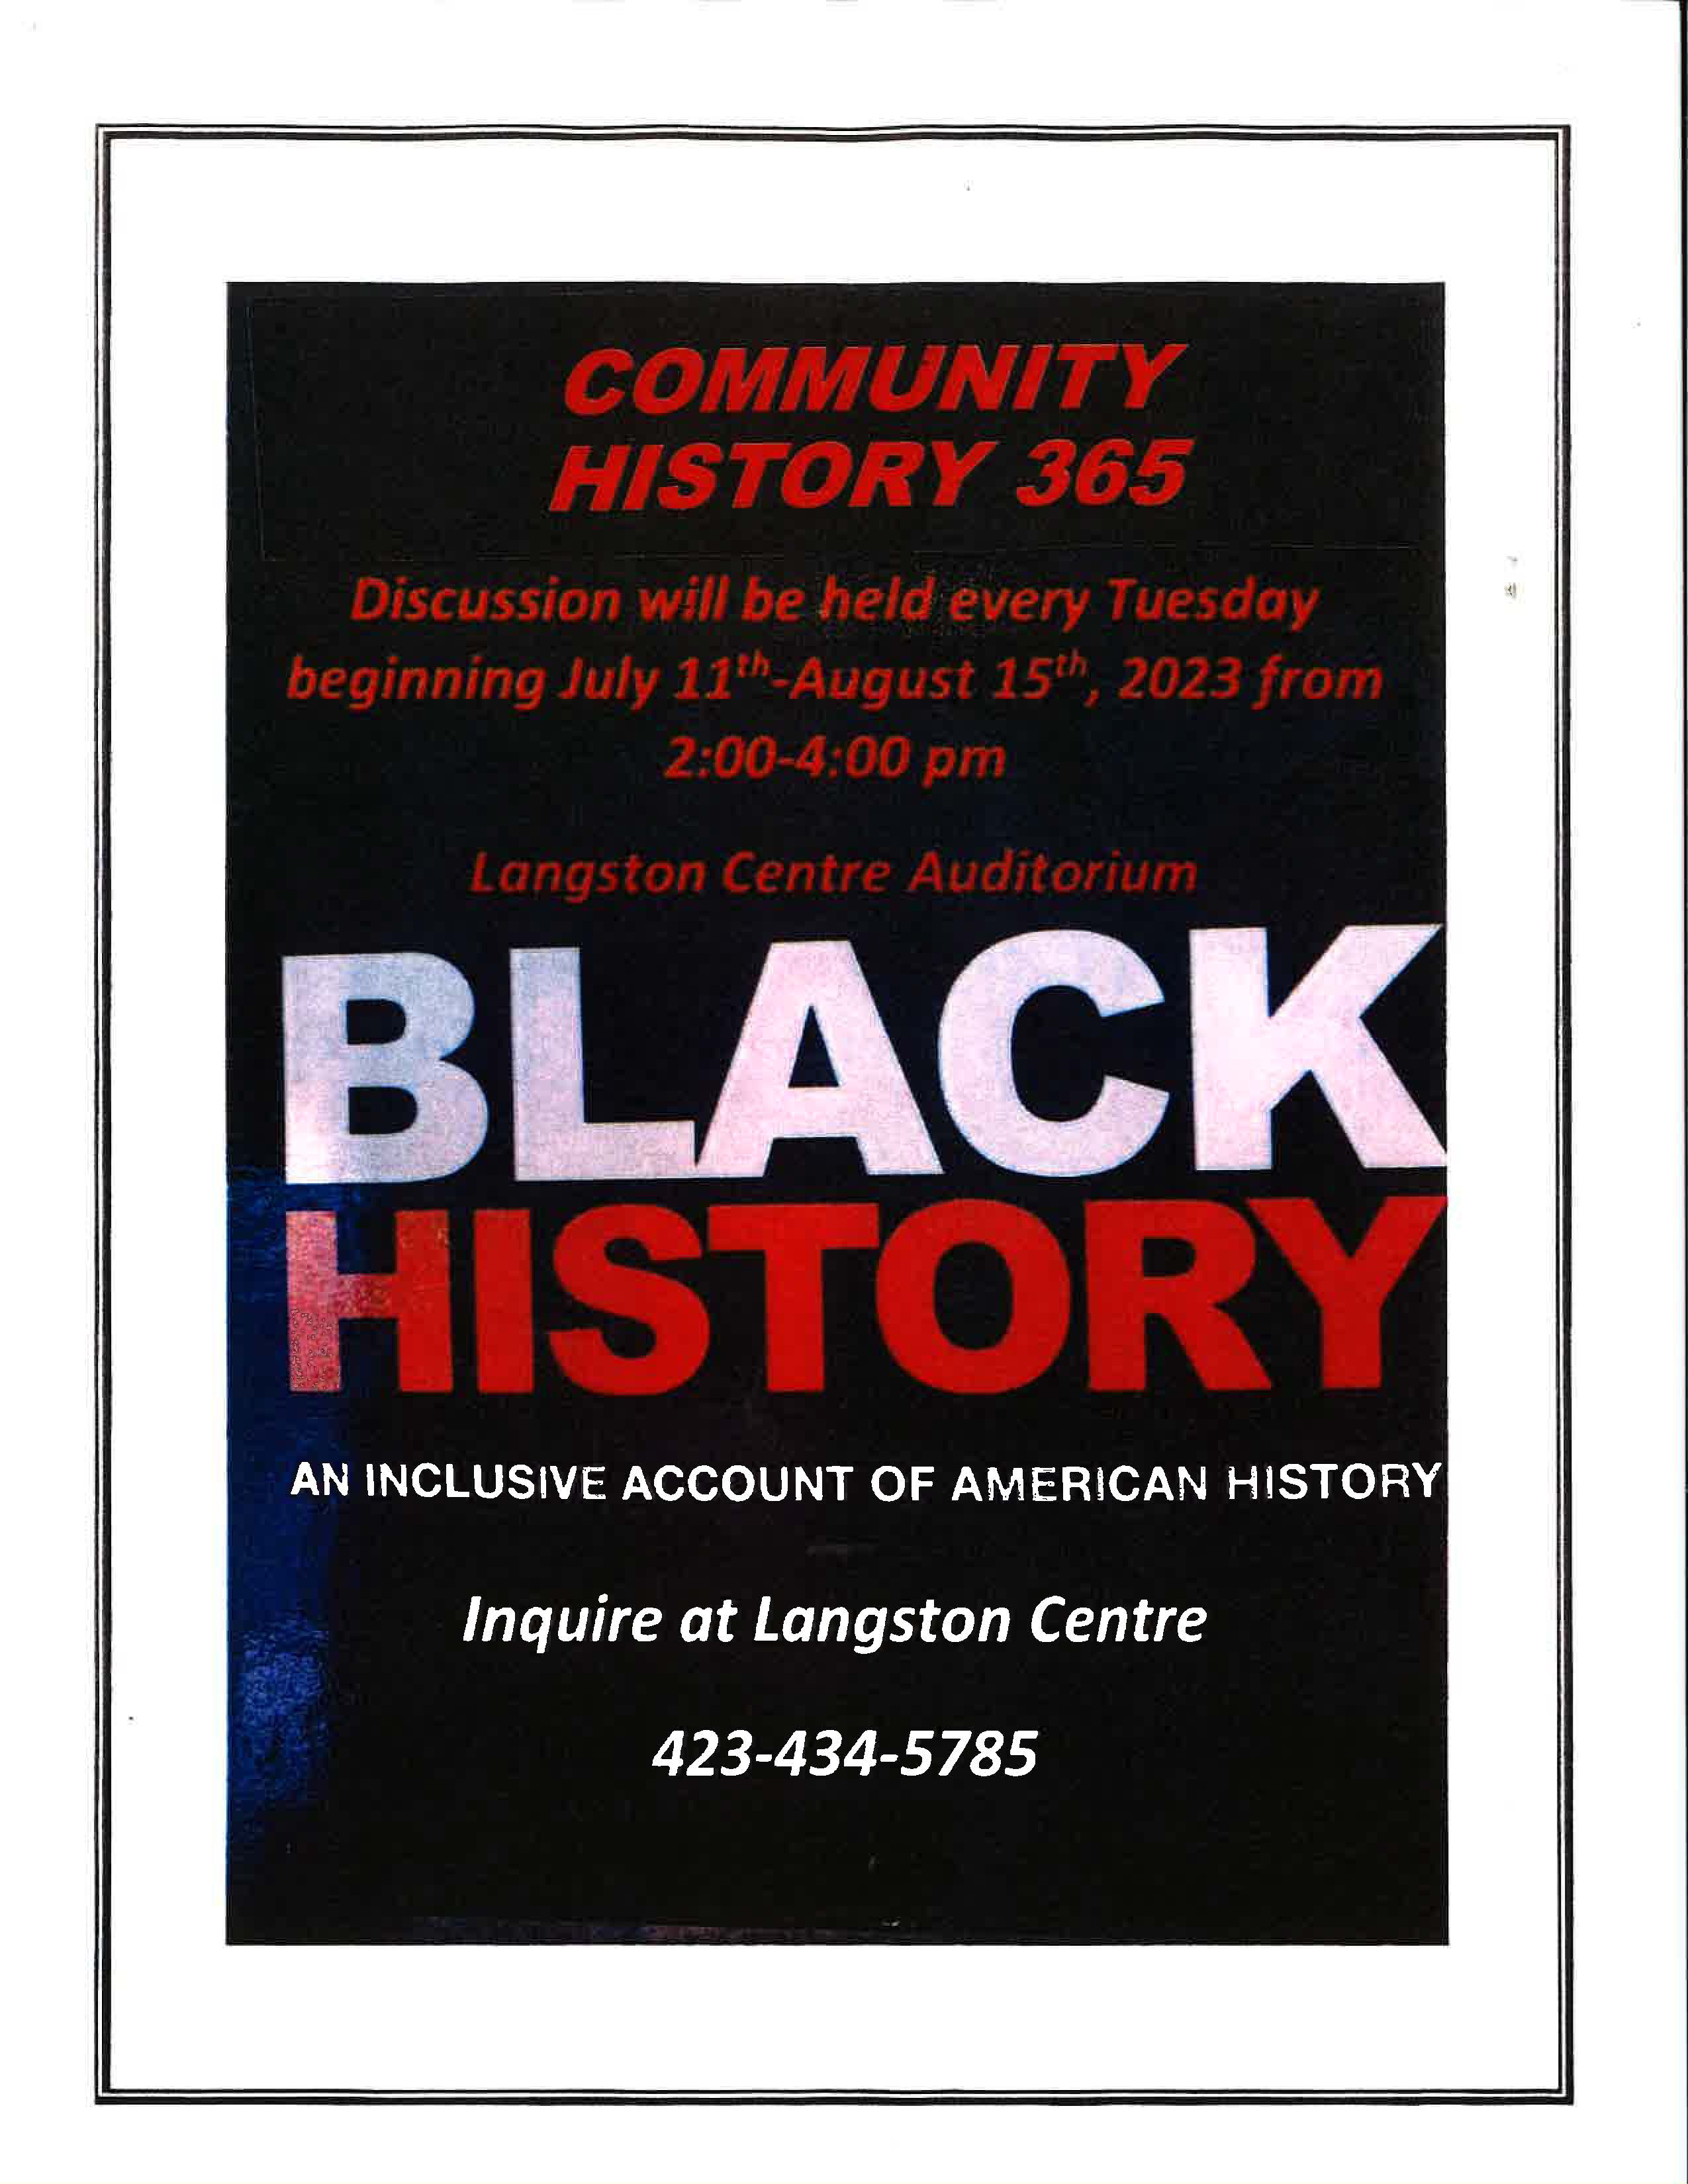 Black history classes flyer